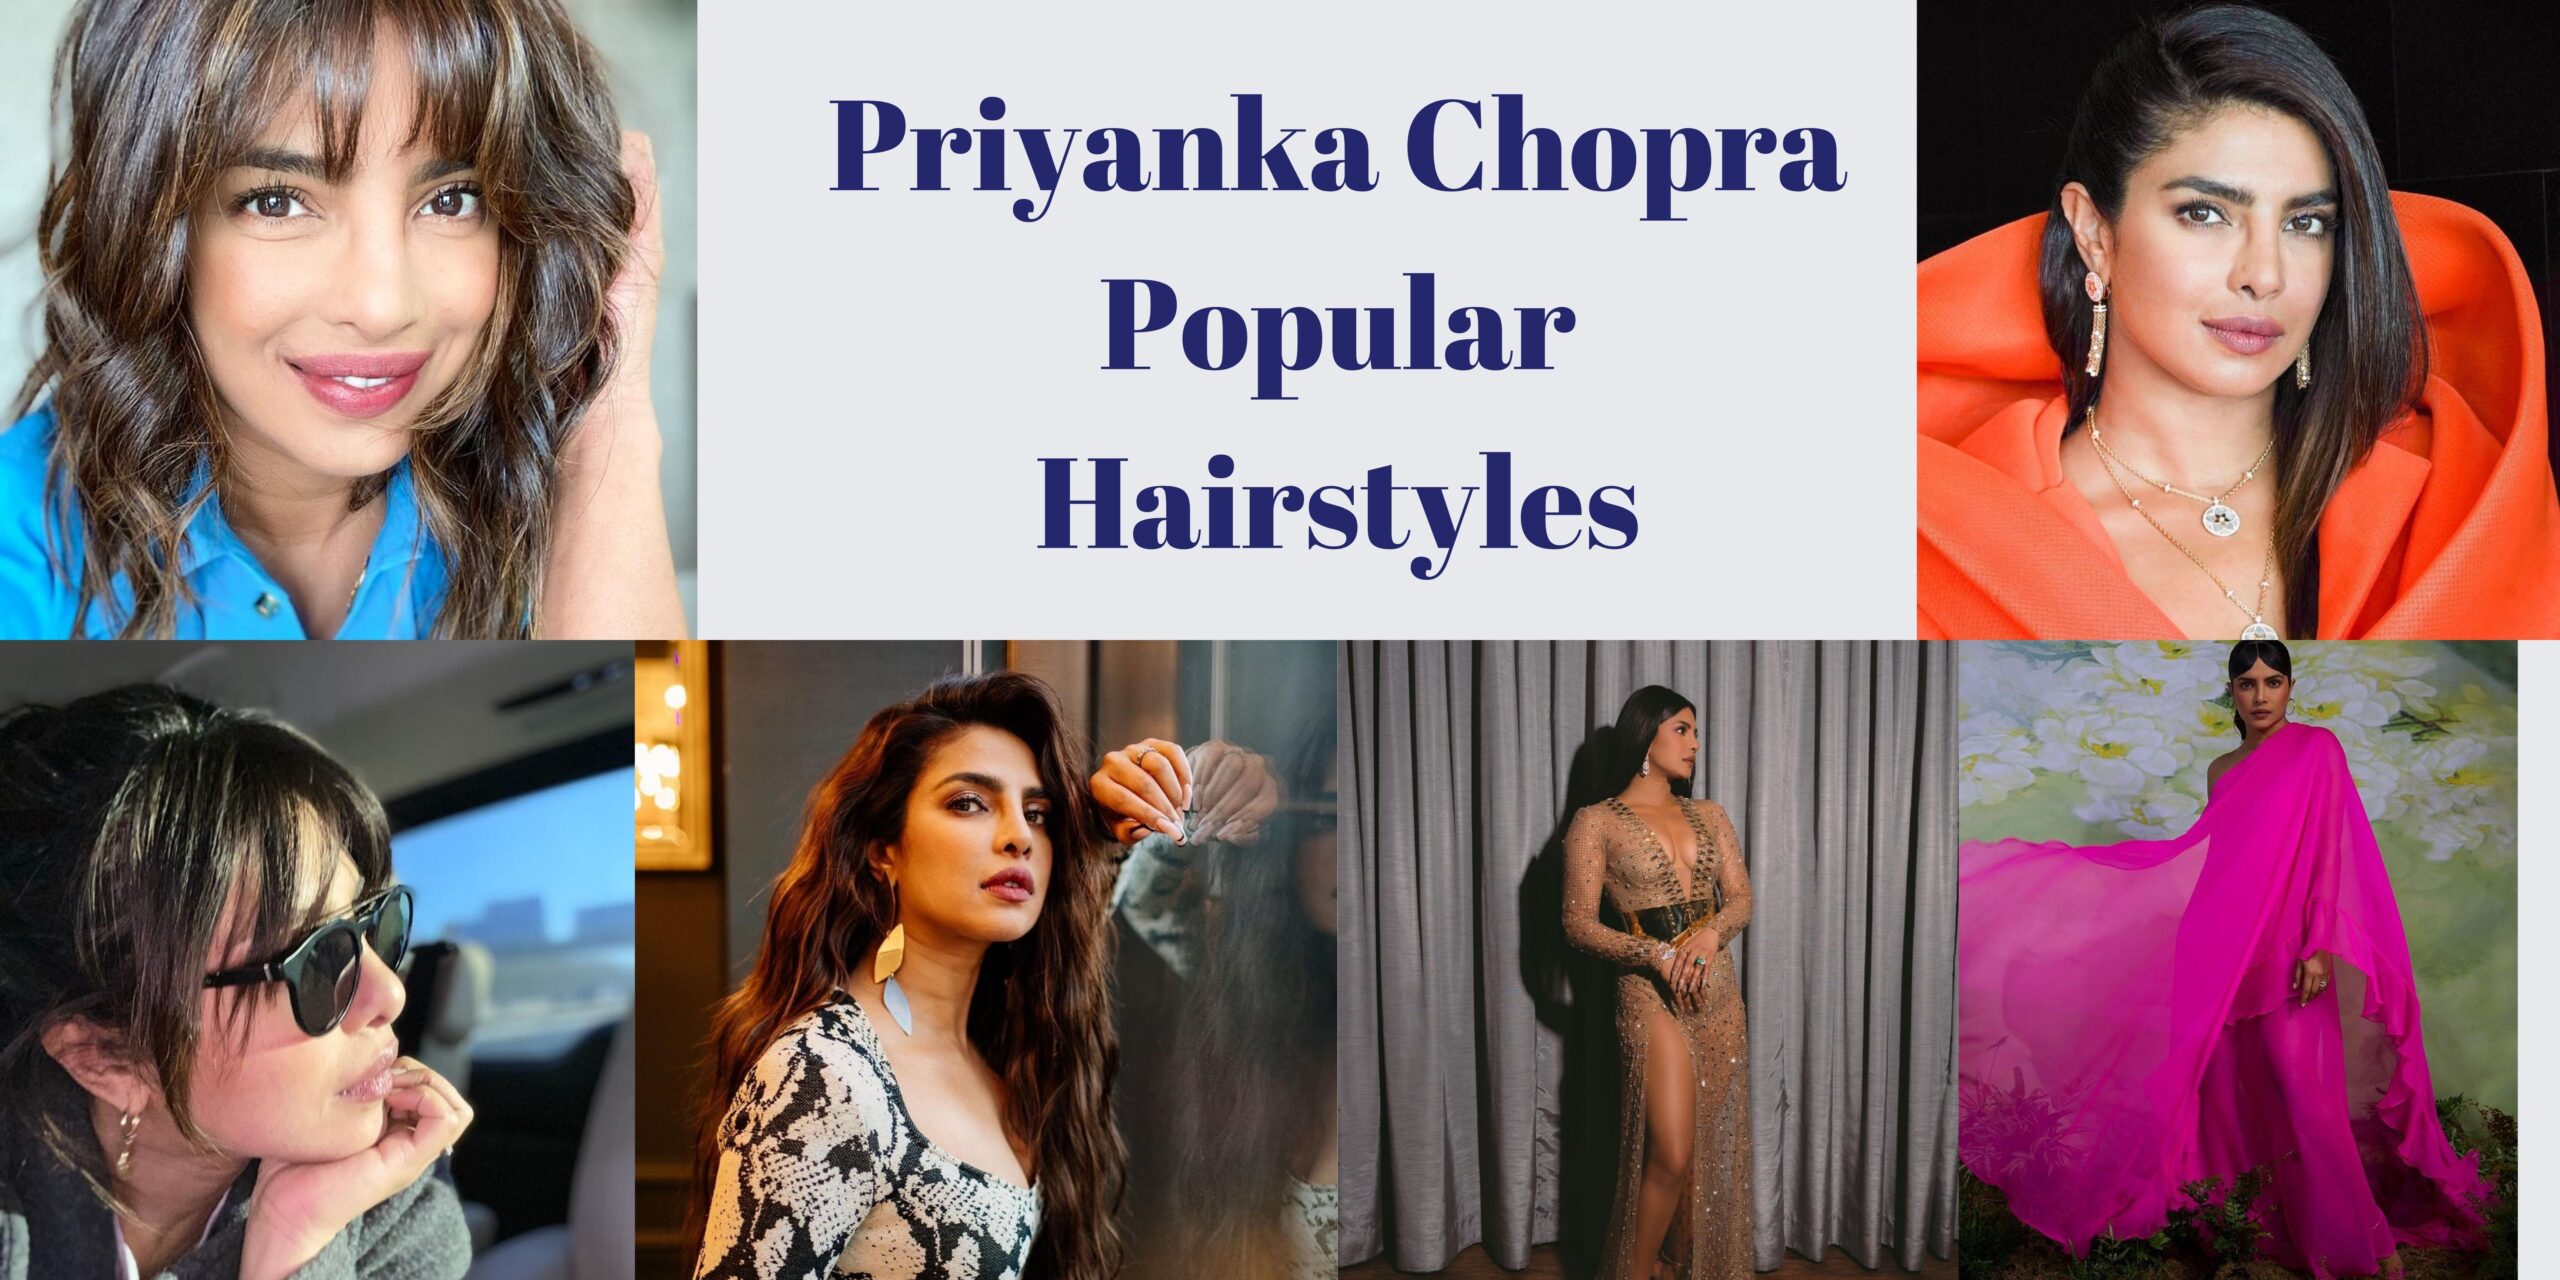 20 Priyanka Chopra Popular Hairstyles May Fall You In Love For Her